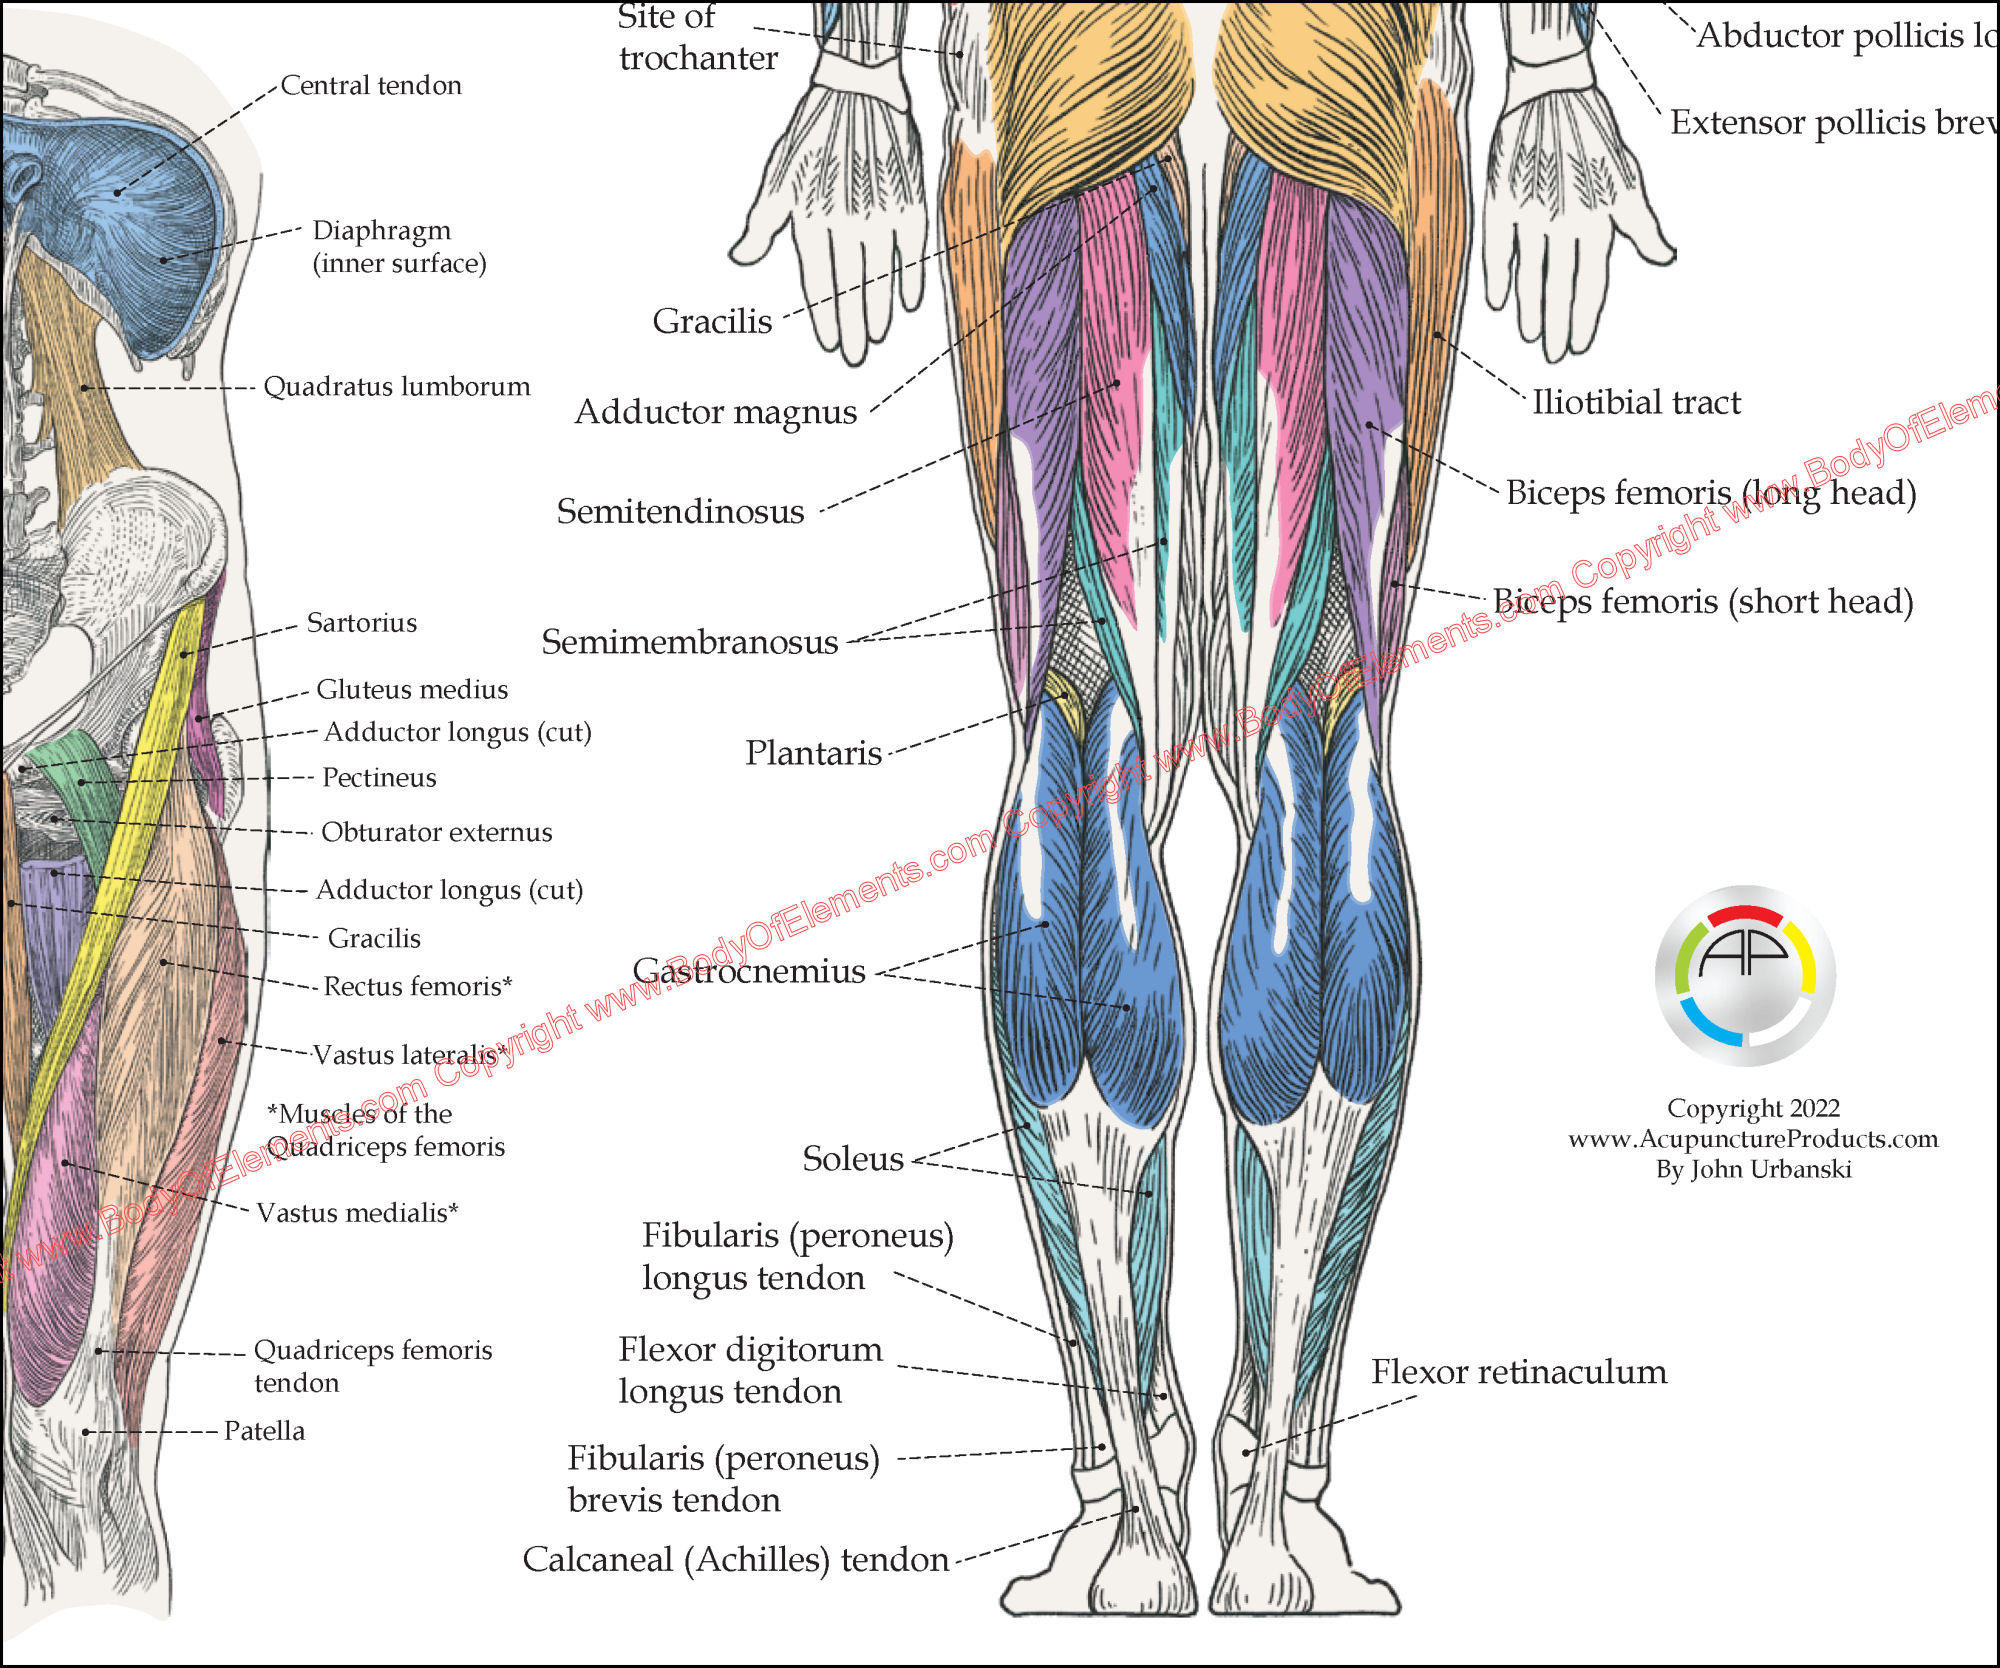 Deep Muscle Anatomy Posters